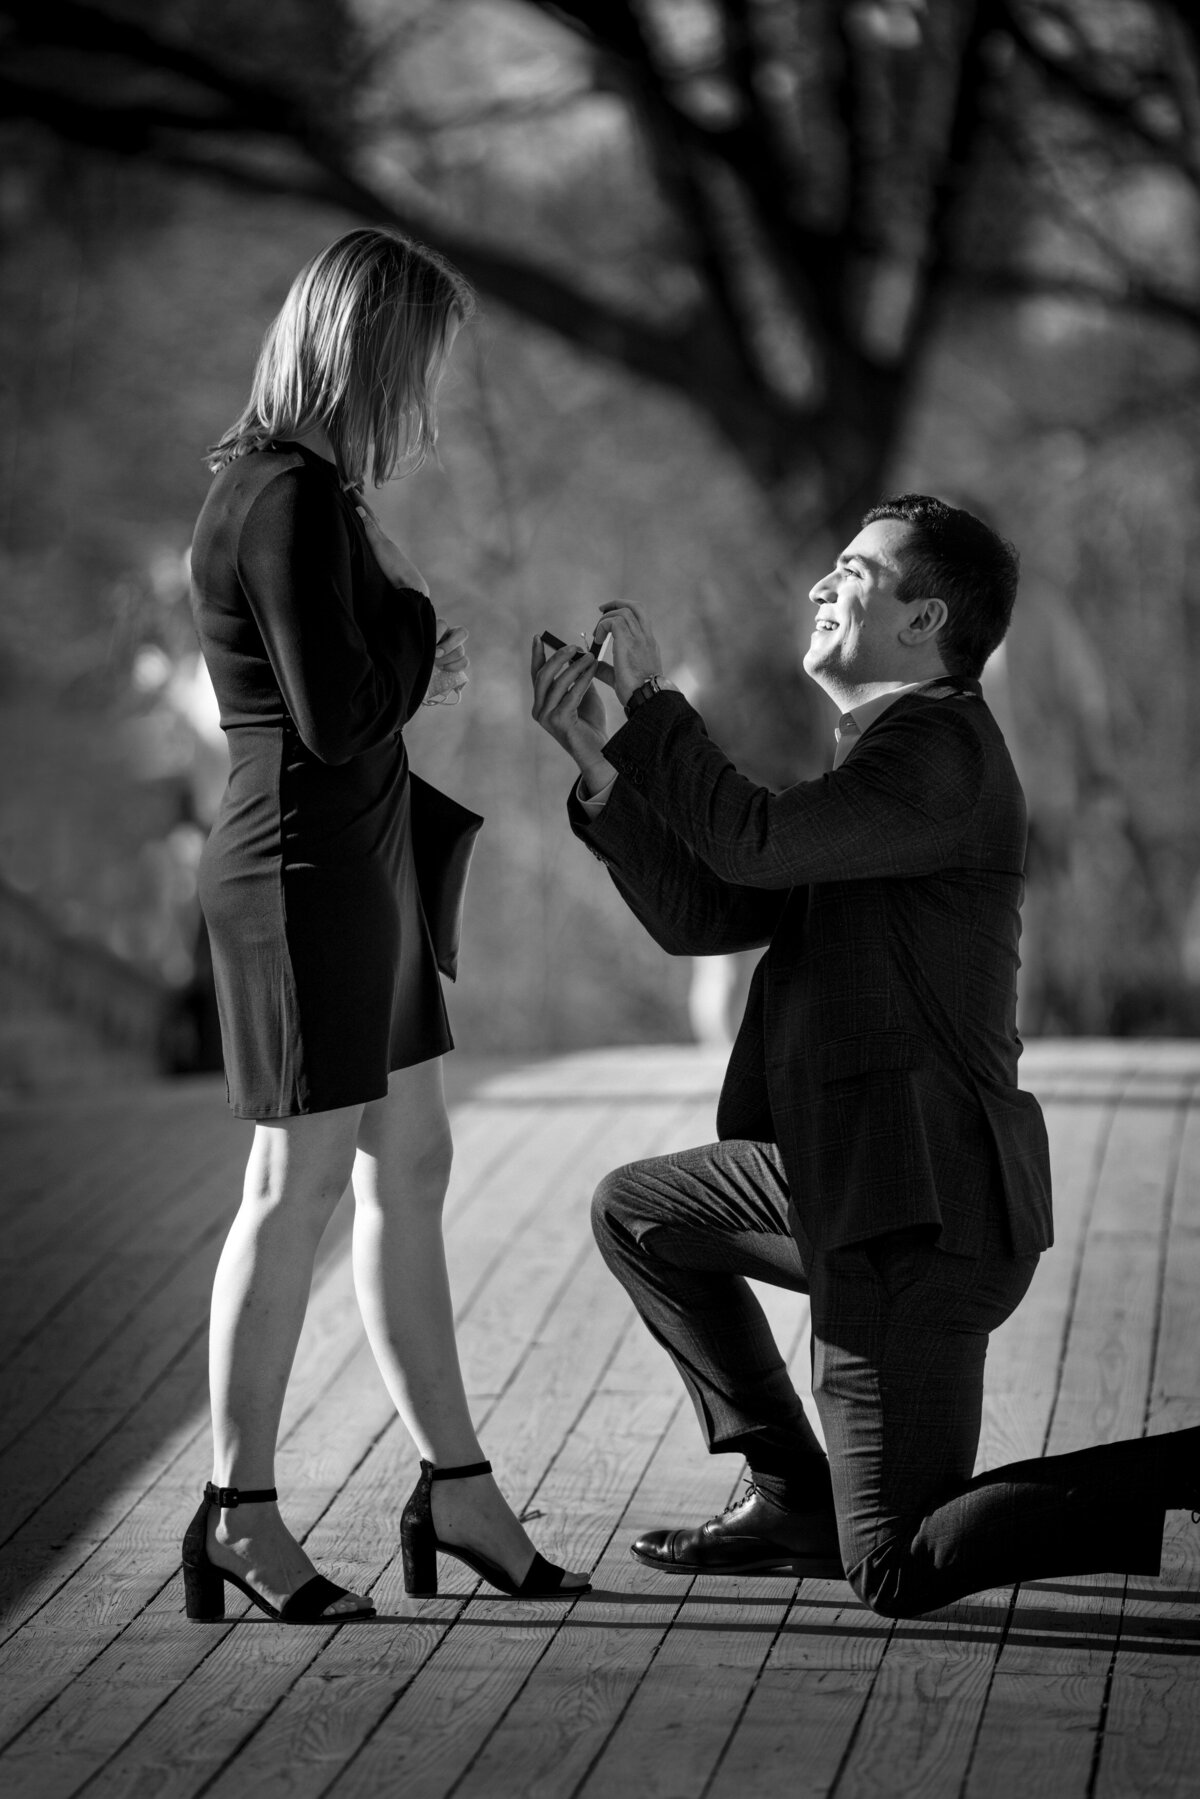 A man kneeling down proposing to a woman.